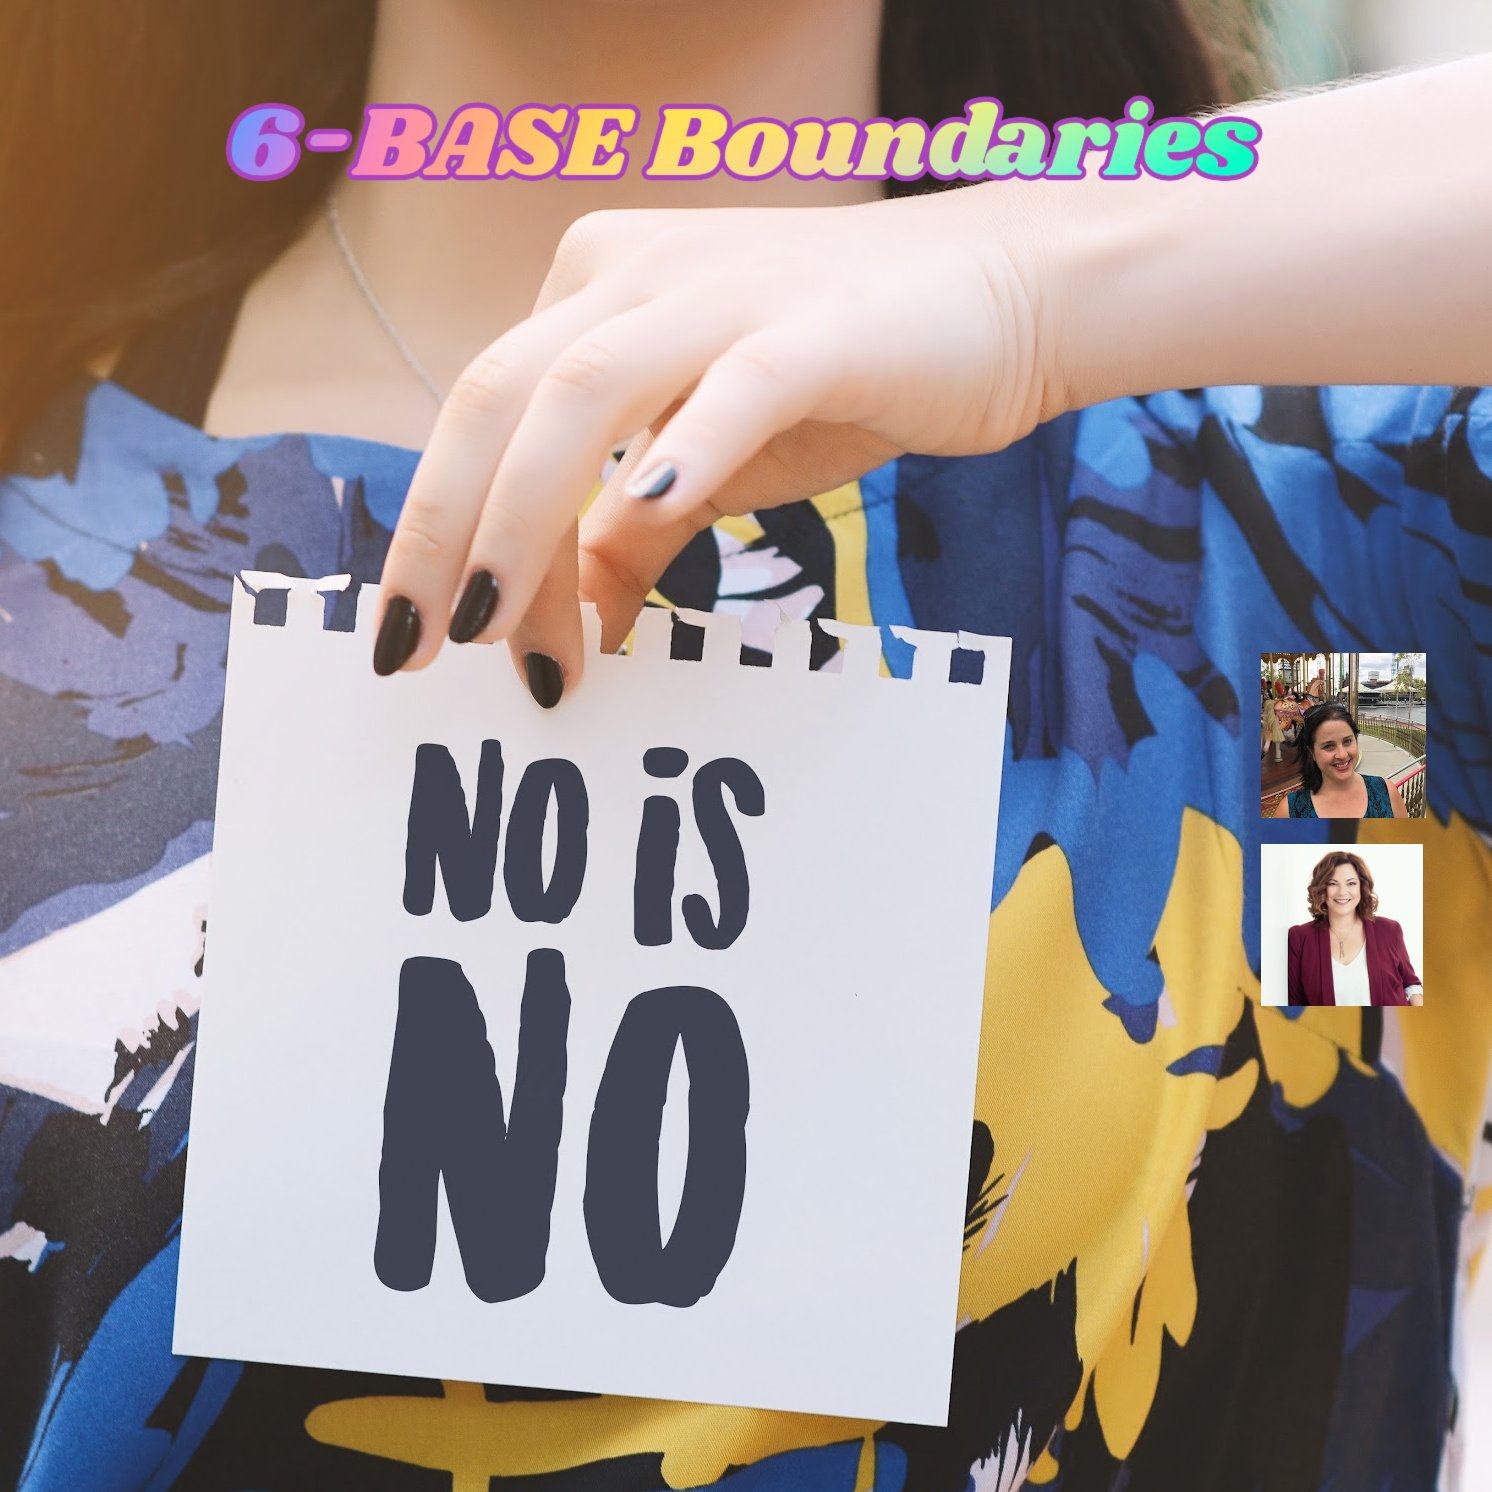 6-BASE Boundaries